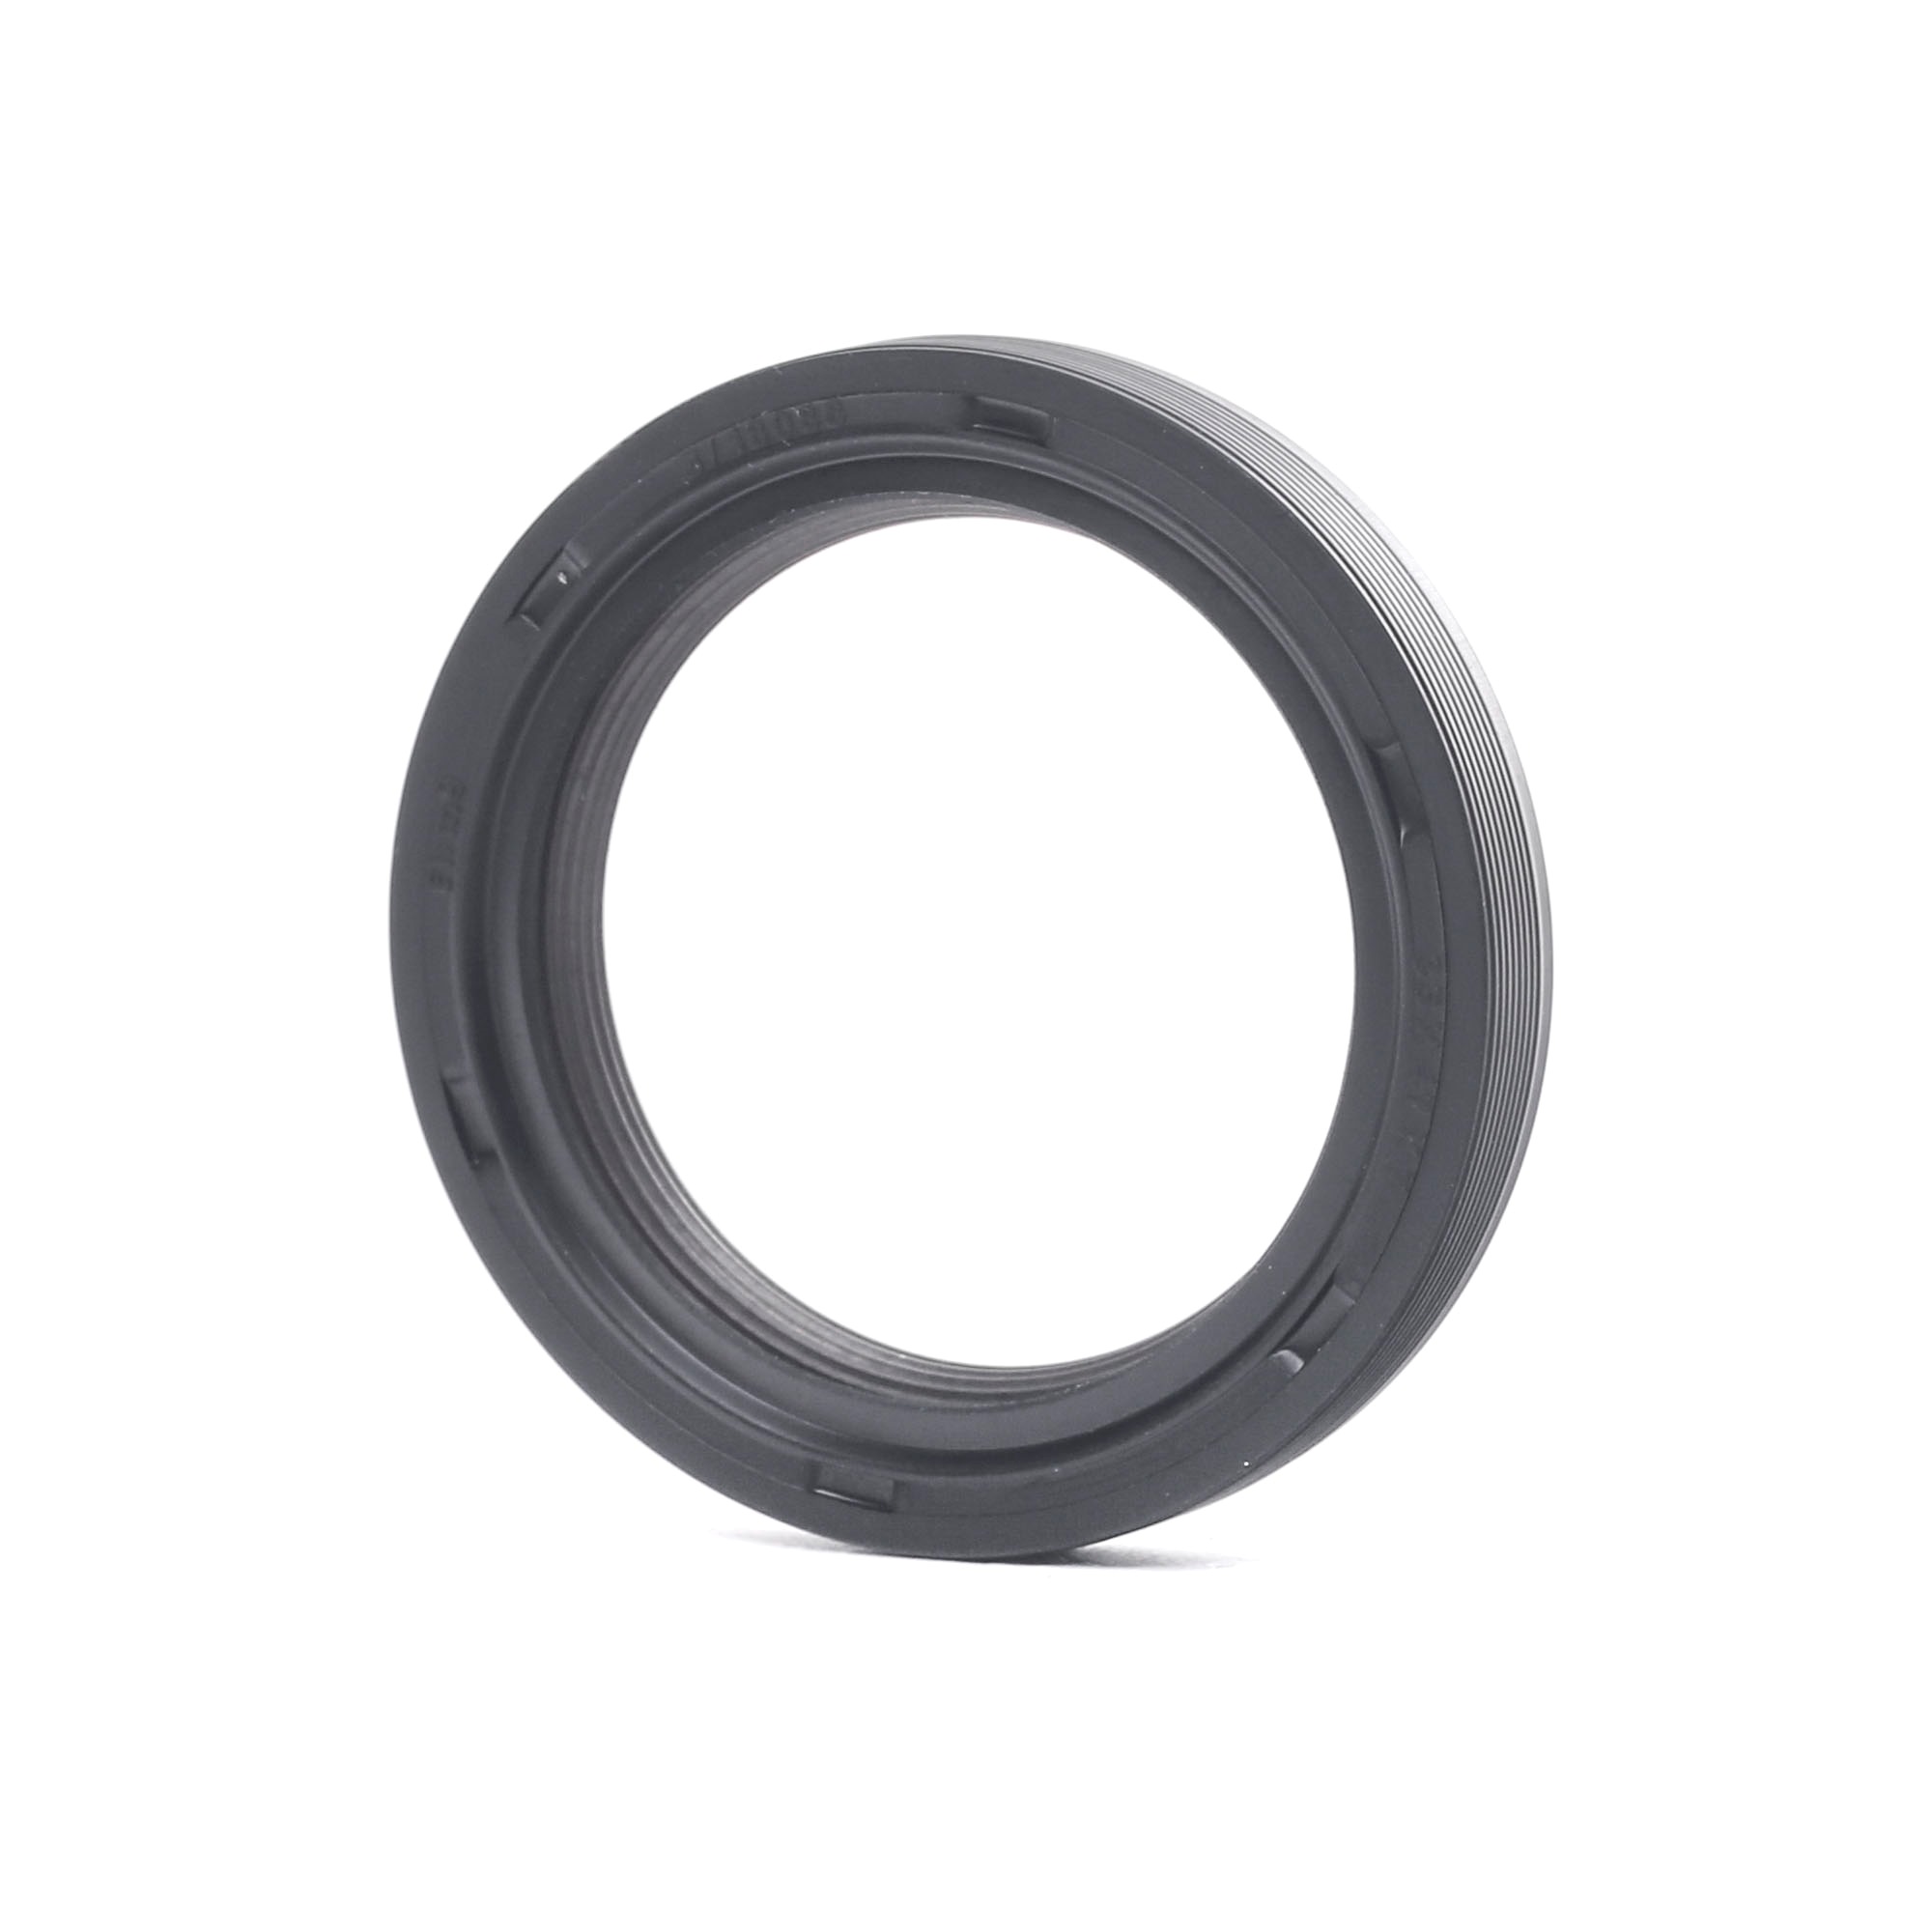 ELRING 431.420 Crankshaft seal with mounting sleeve, PTFE (polytetrafluoroethylene)/ACM (polyacrylate rubber)